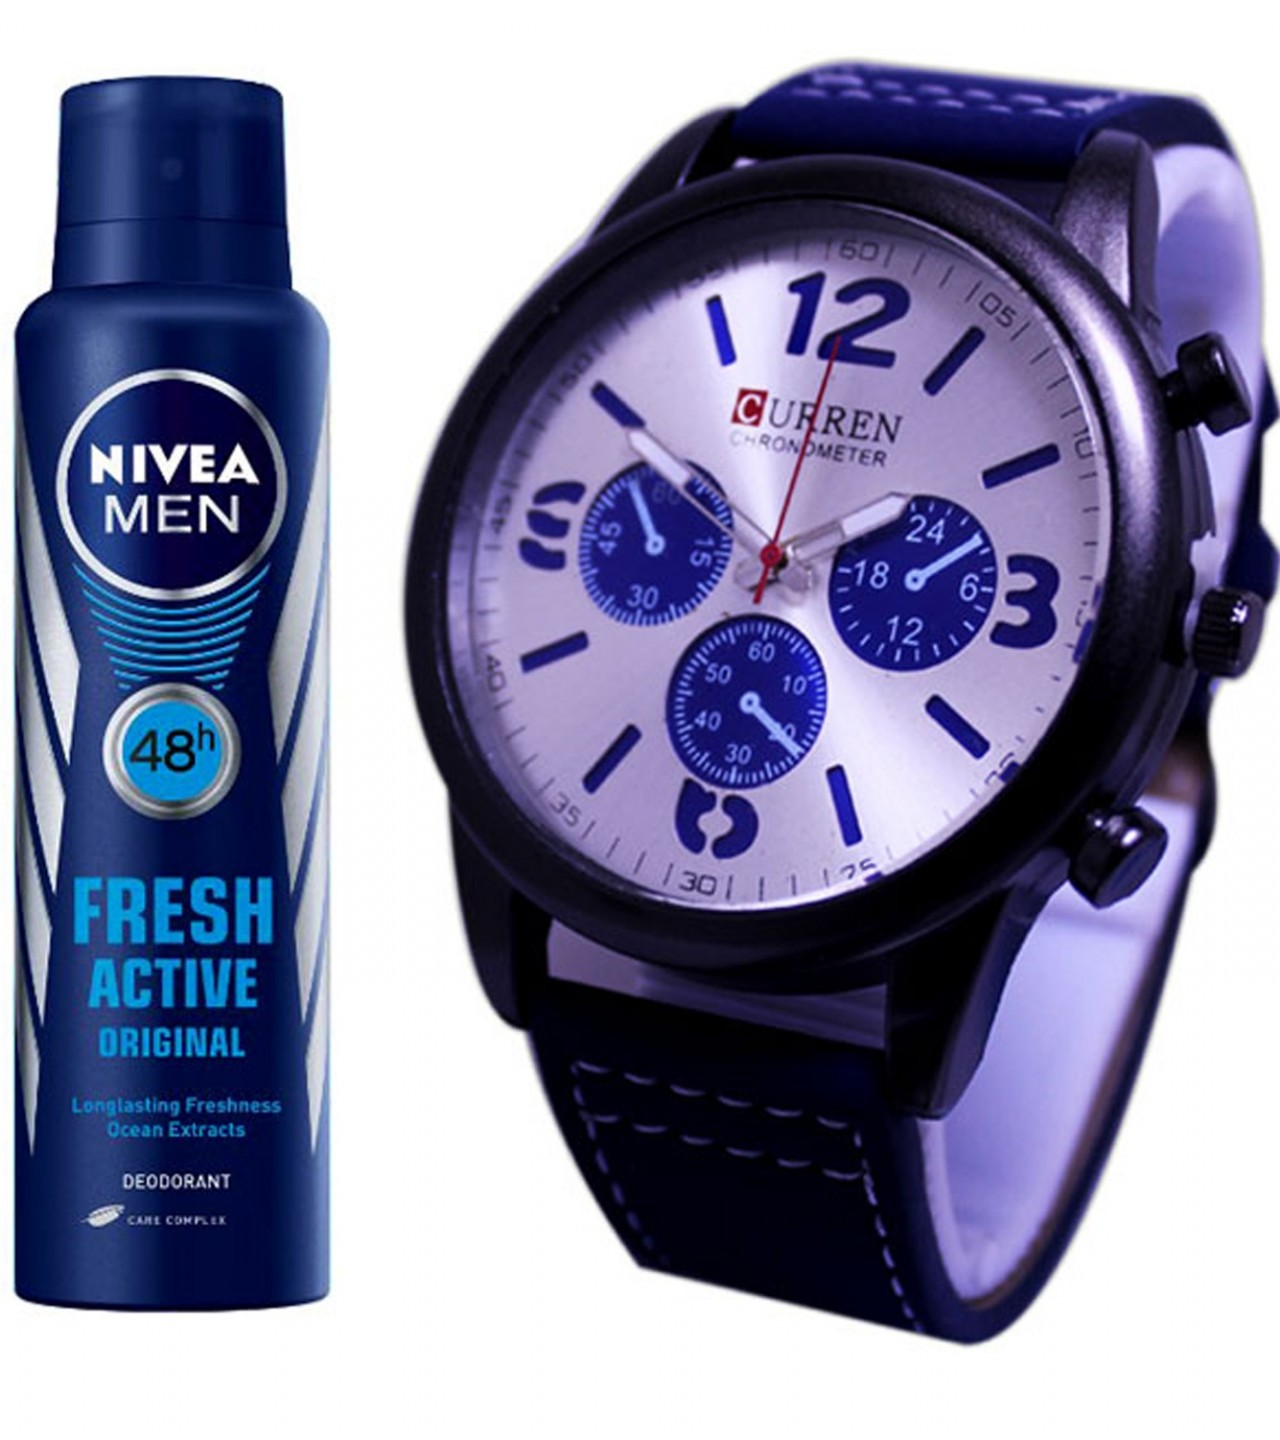 Buy Analog Watch & Get Free Nivea Fresh Active Body Spray for Men - 150 ml